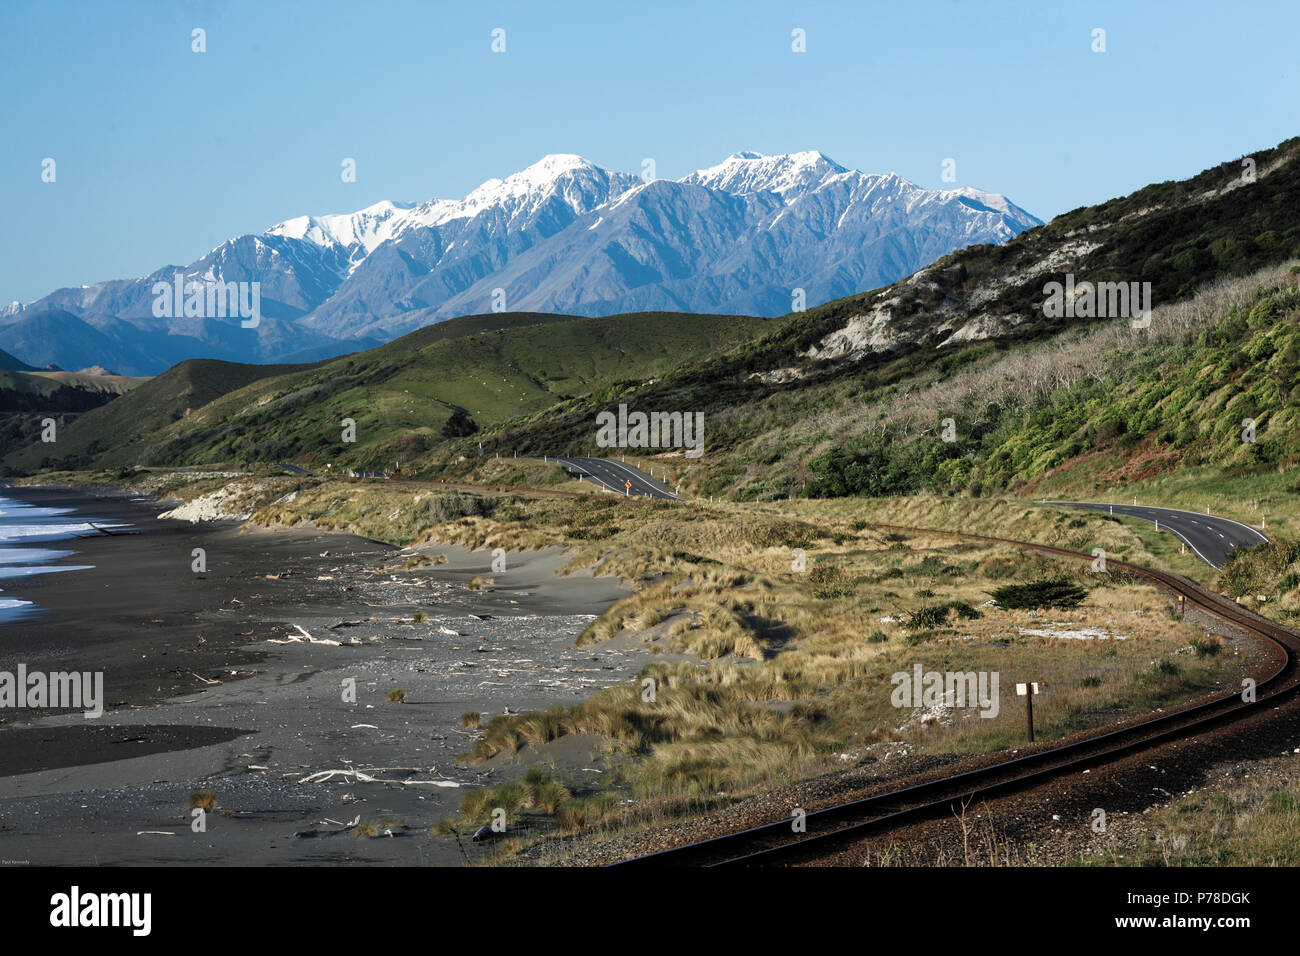 La costa de Kaikoura antes del terremoto de 2016 en Kaikoura, Nueva Zelanda Foto de stock